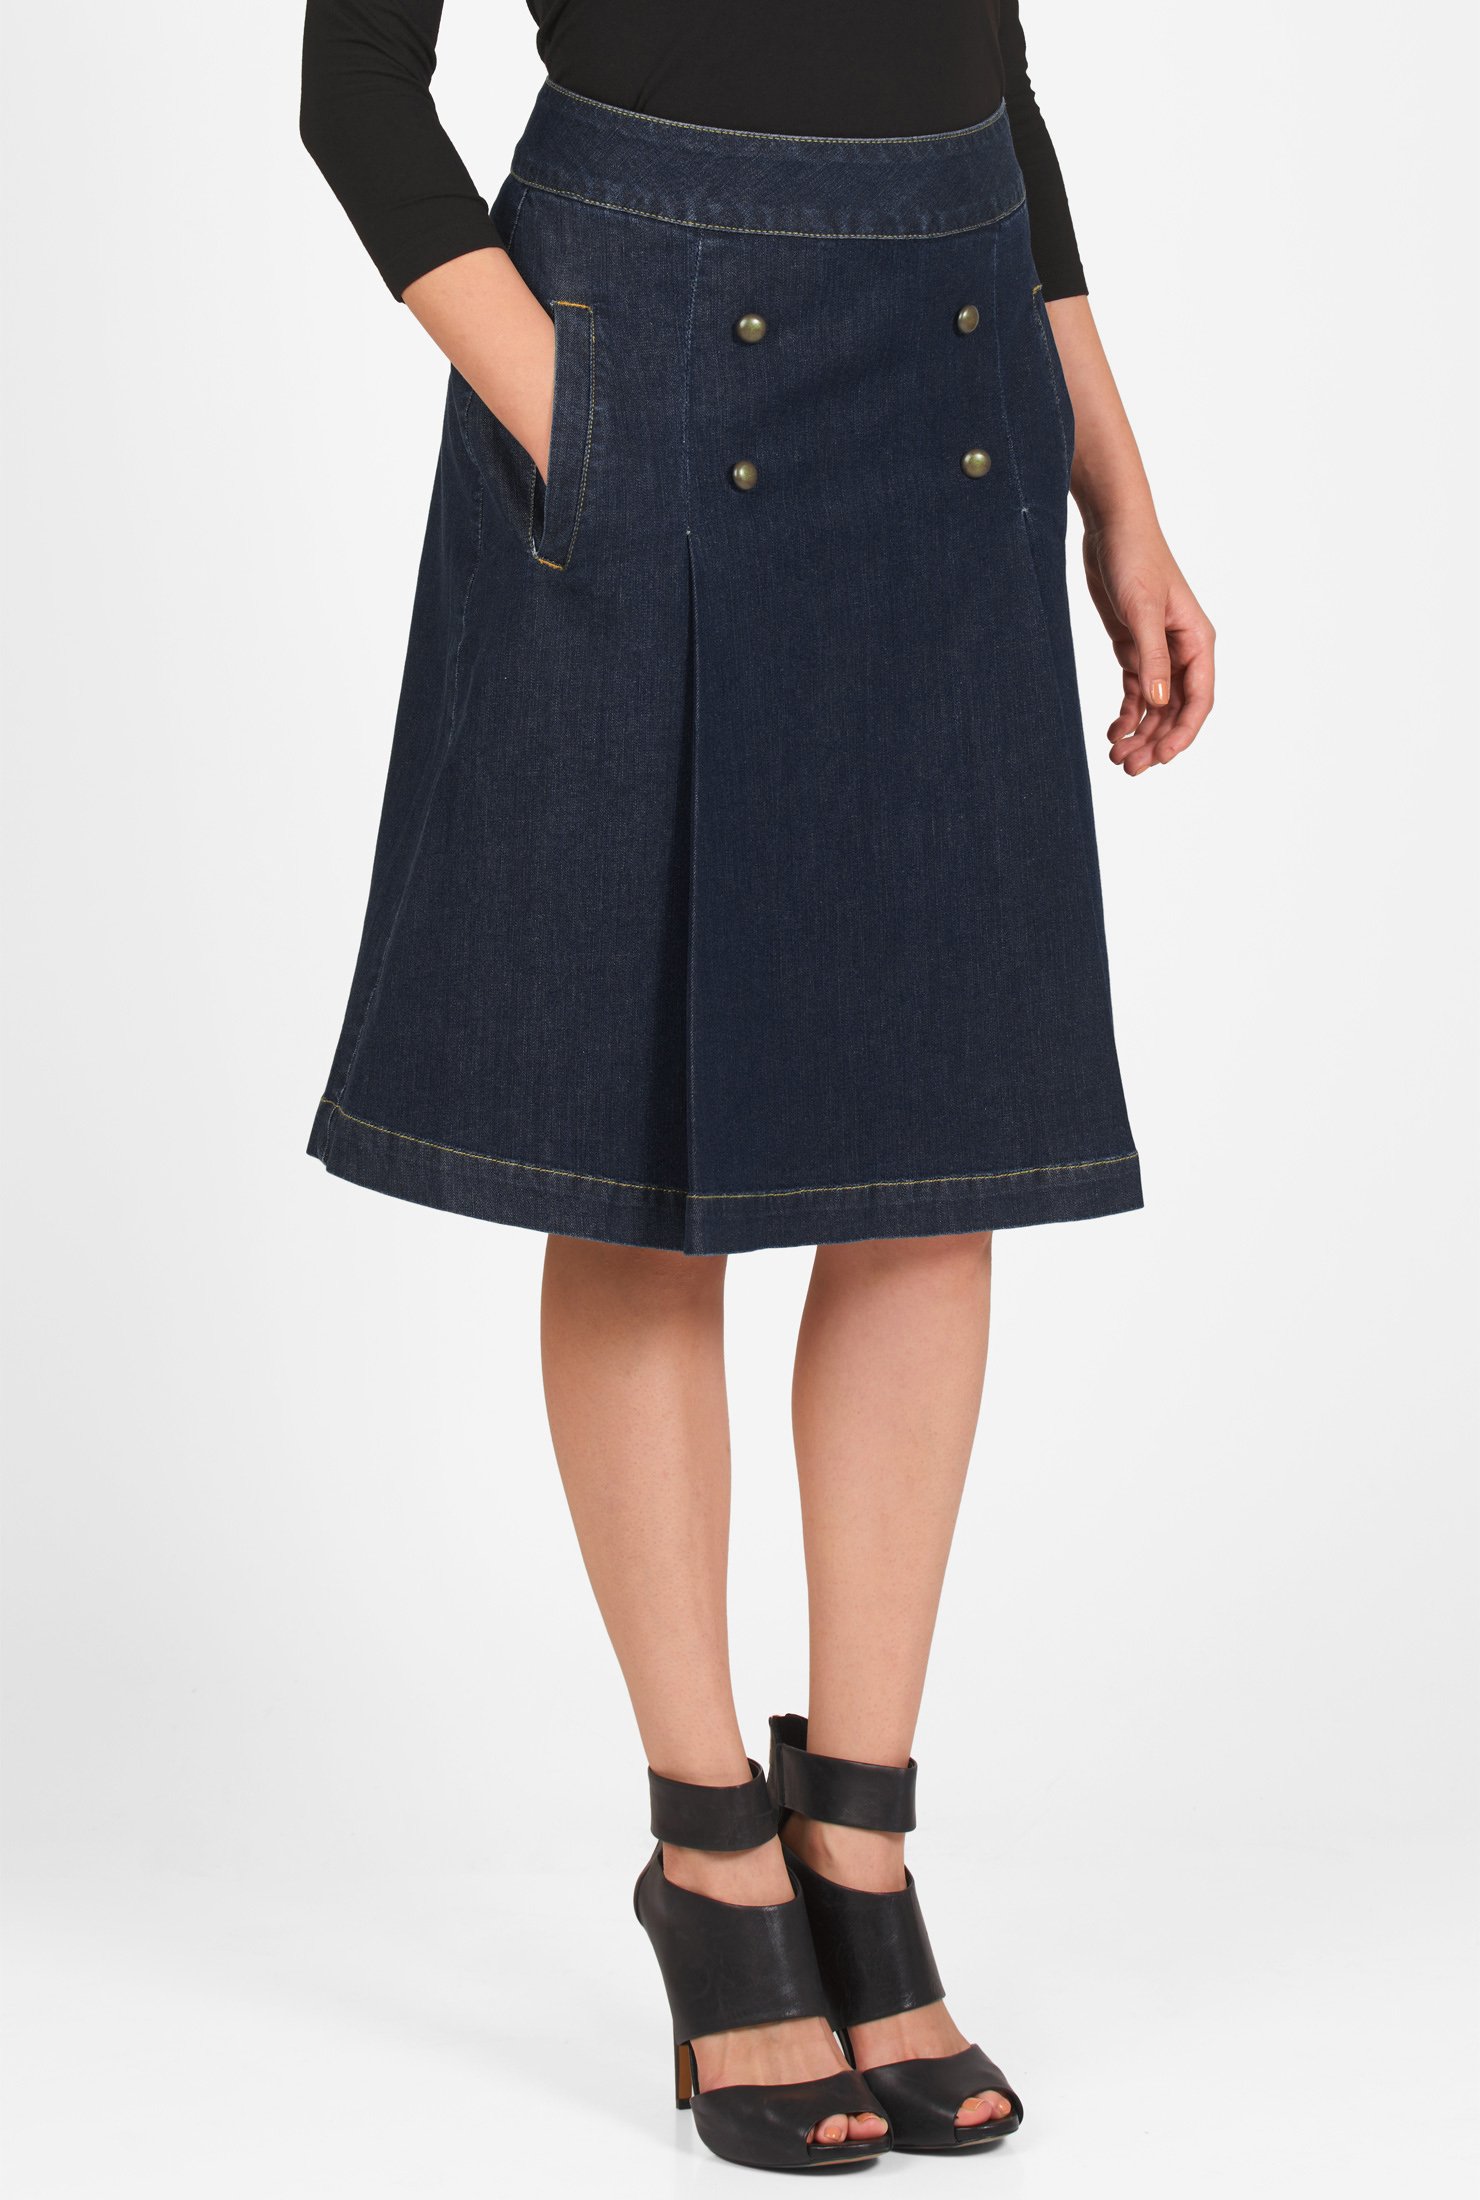 Shop Deep indigo denim button pleat skirt | eShakti